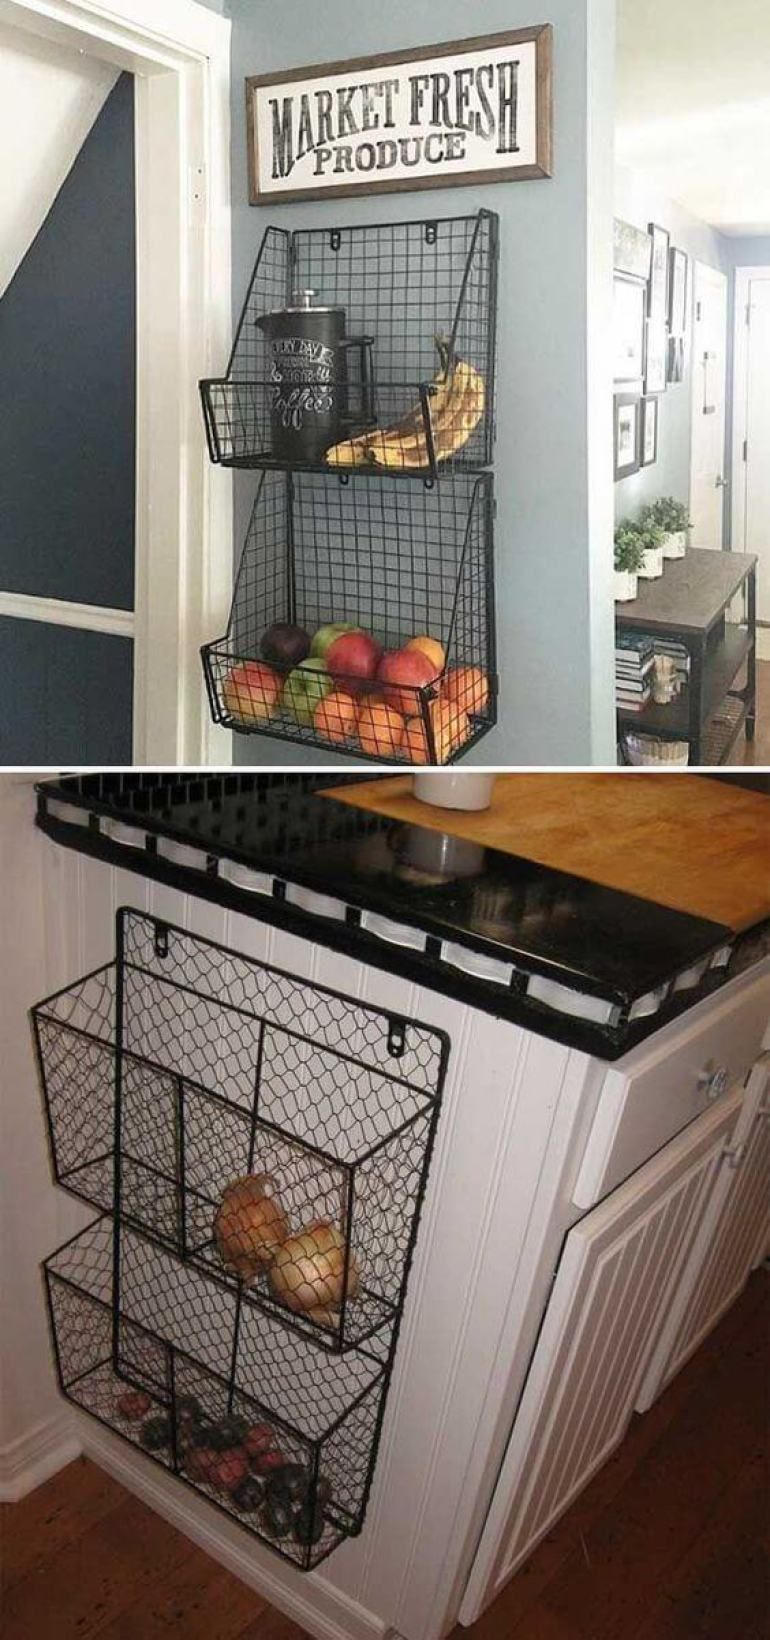 Wire Basket for Produce Storage